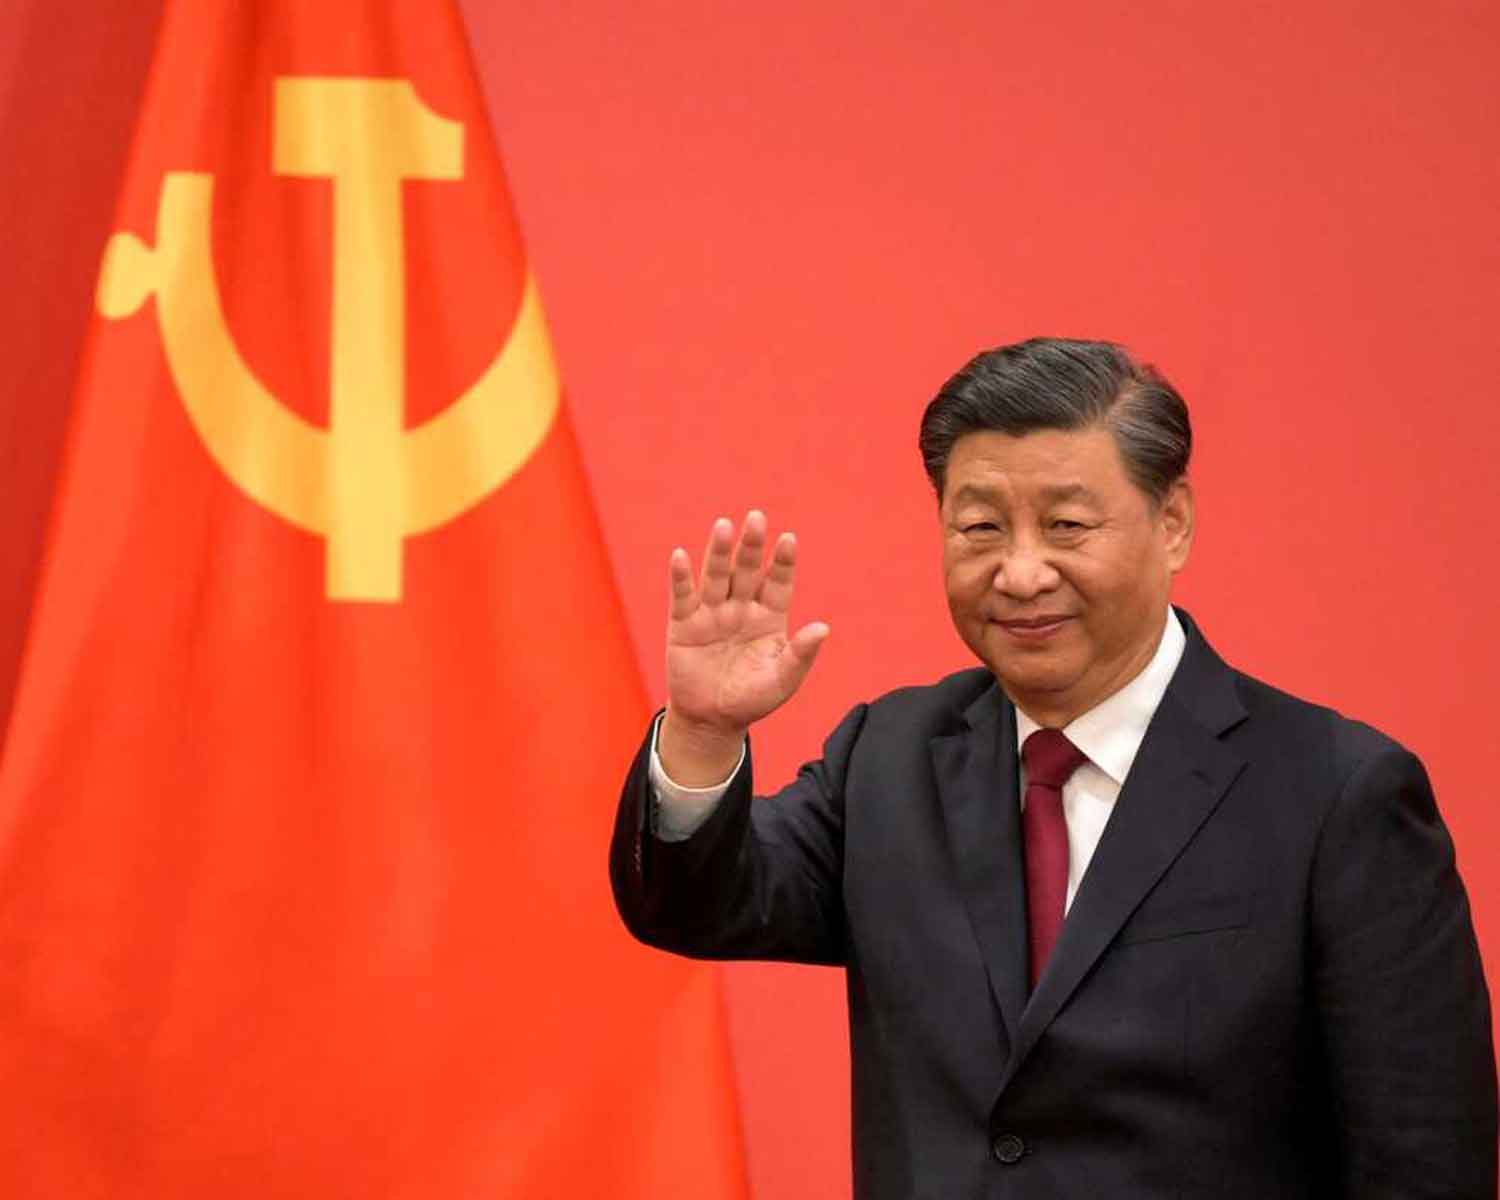 La acest ultim congres, Xi Jinping e reales